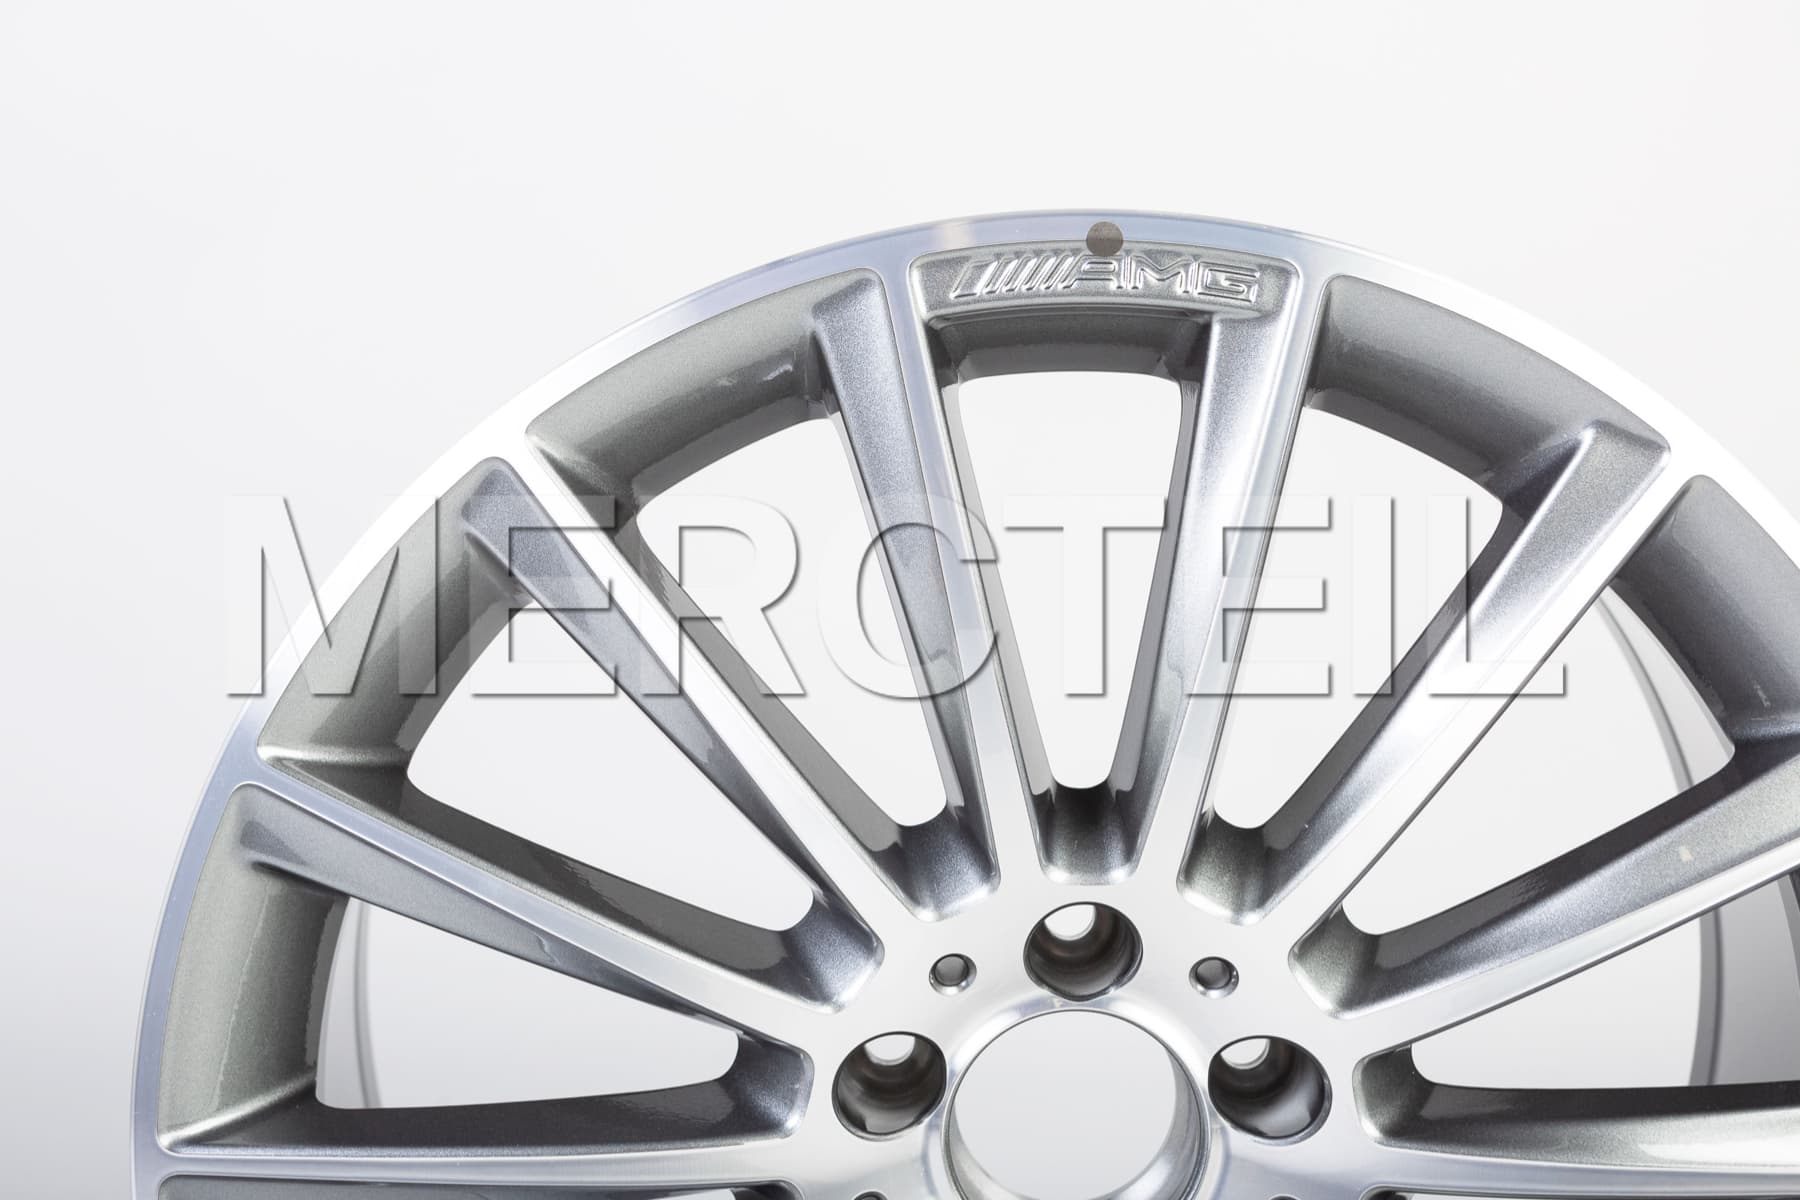 CLS AMG Wheels Multi Spoke 19 Inch Genuine Mercedes AMG (part number: A21840112007X21)